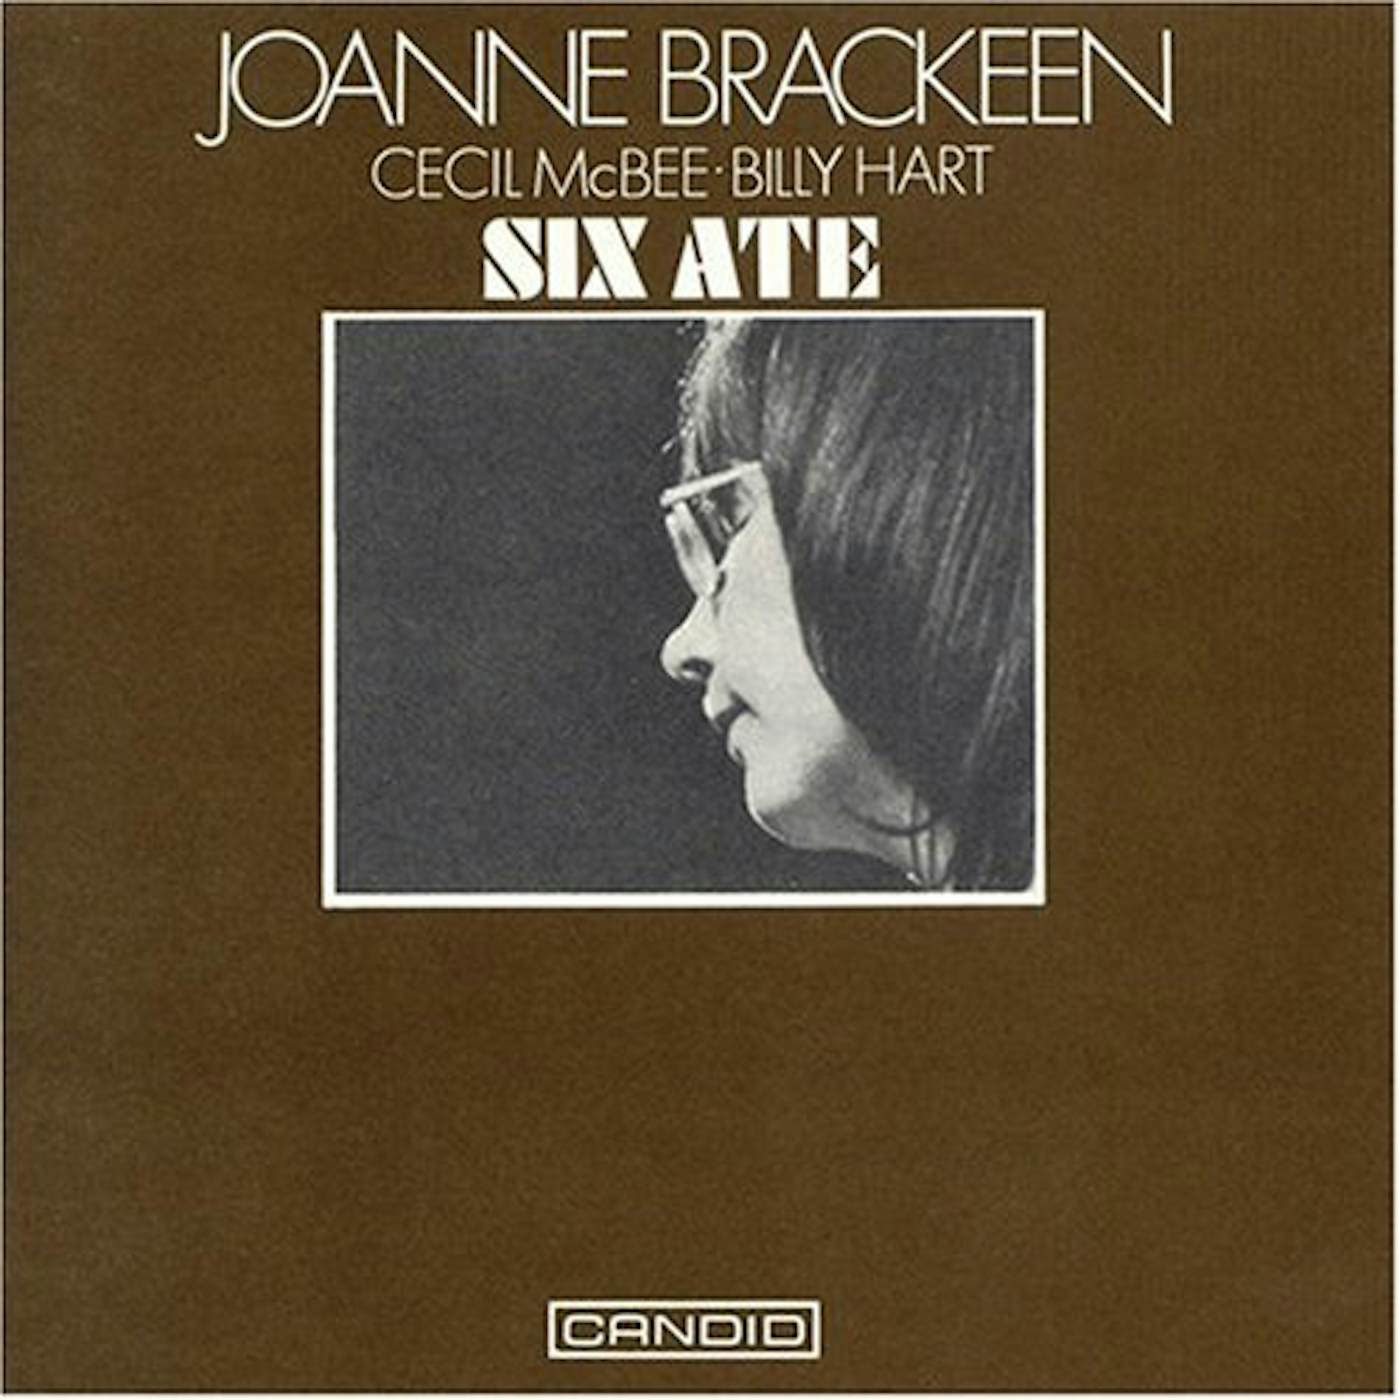 Joanne Brackeen SIX ATE CD